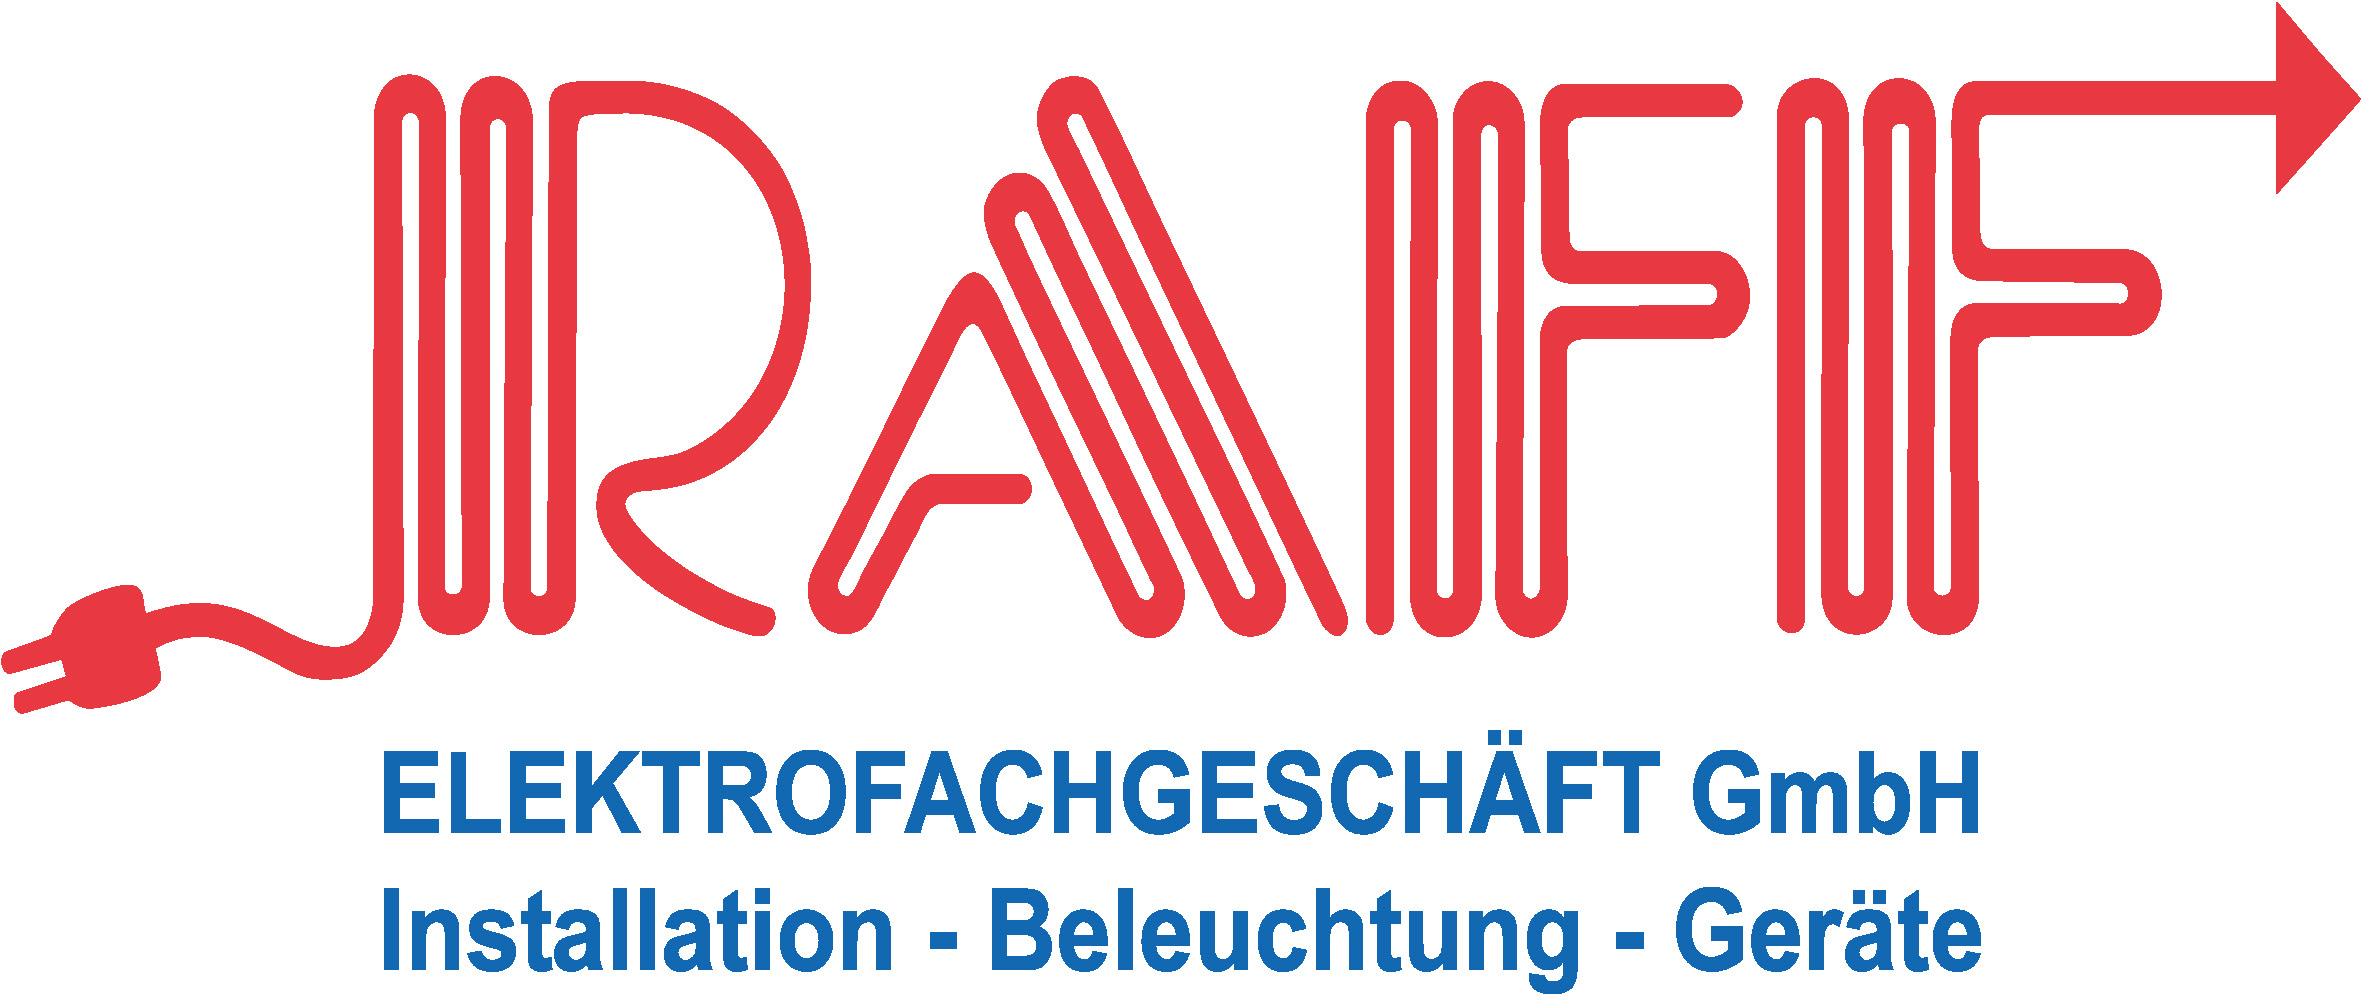 Raff Elektrofachgeschäft GmbH Logo